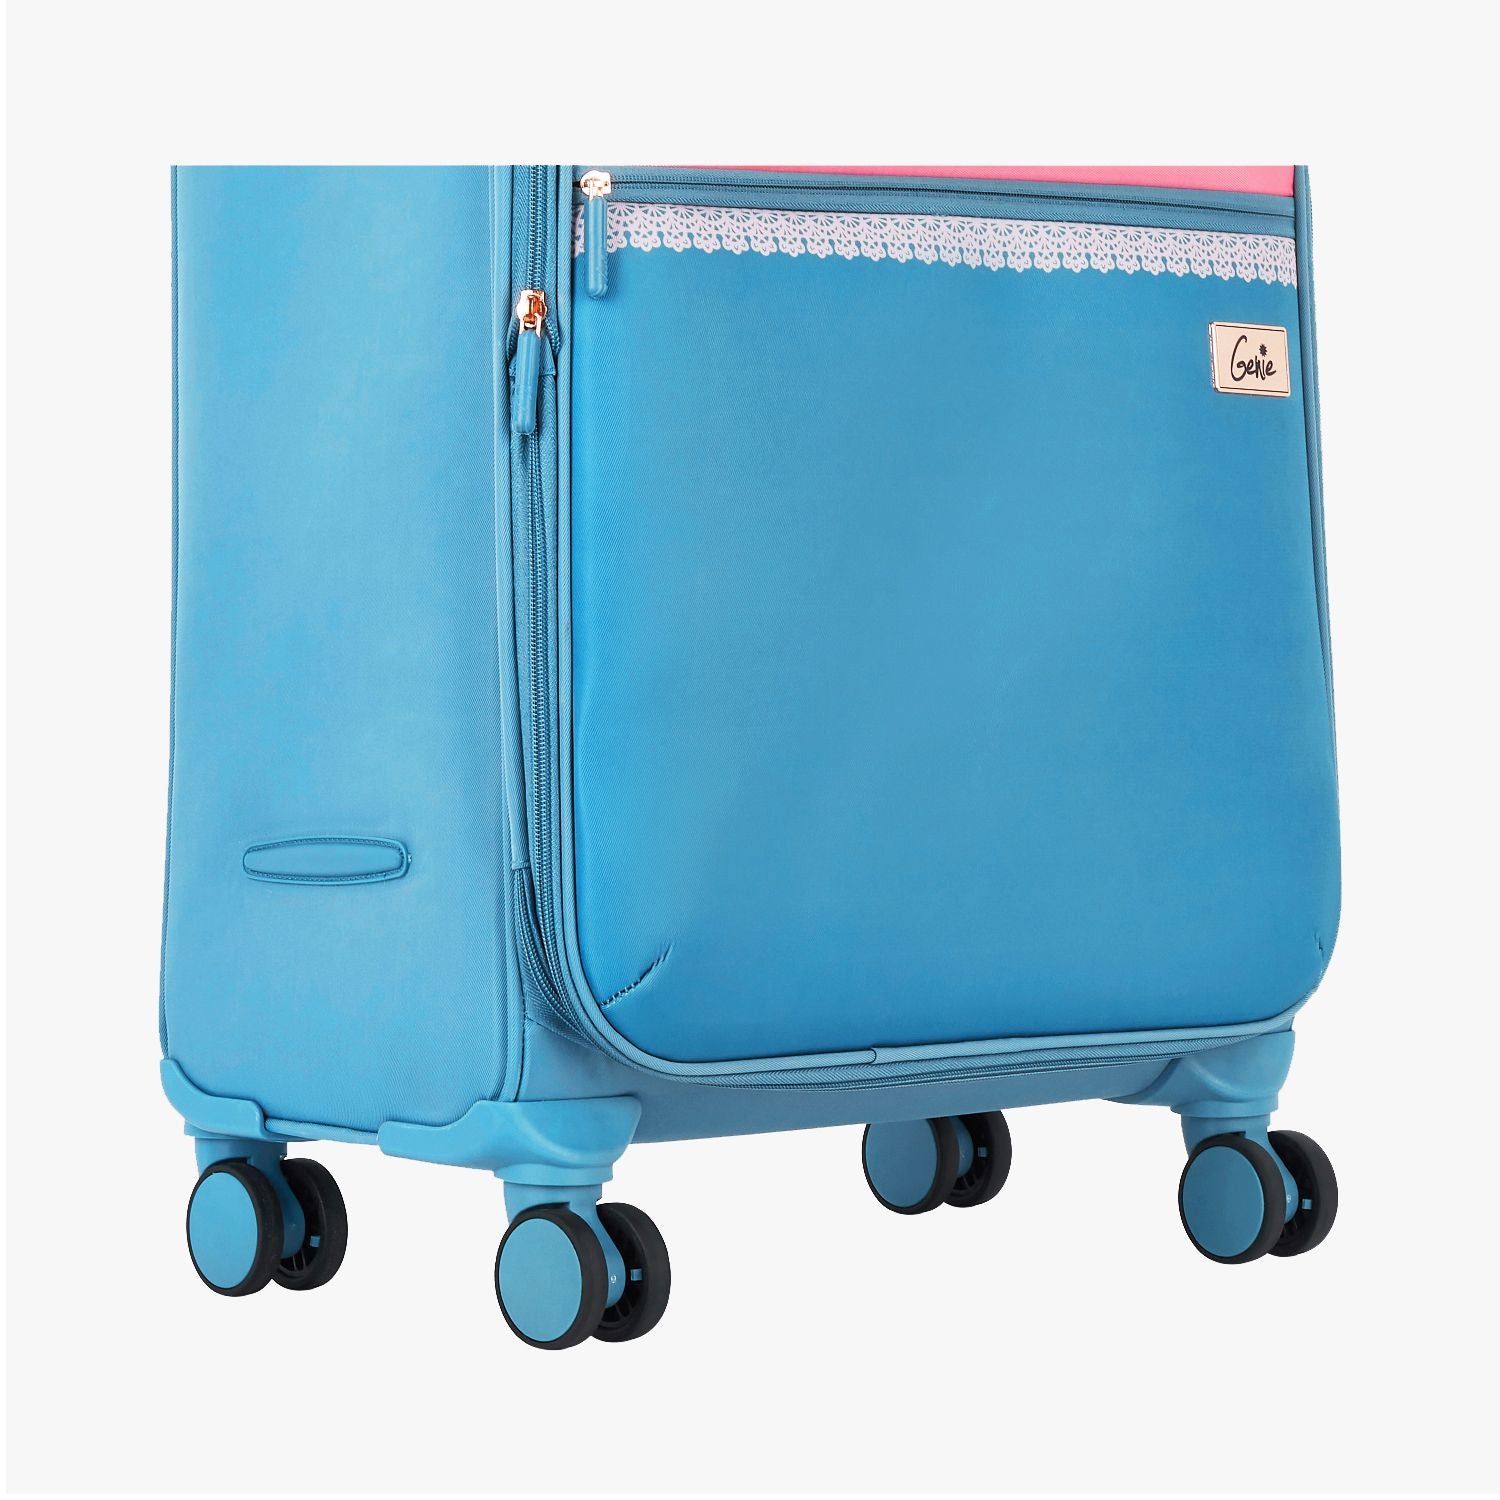 Jpi Shubh Florentine Trolley Bag Small Size Hard Side Travel Bag for Women,  8 Wheel Luggage